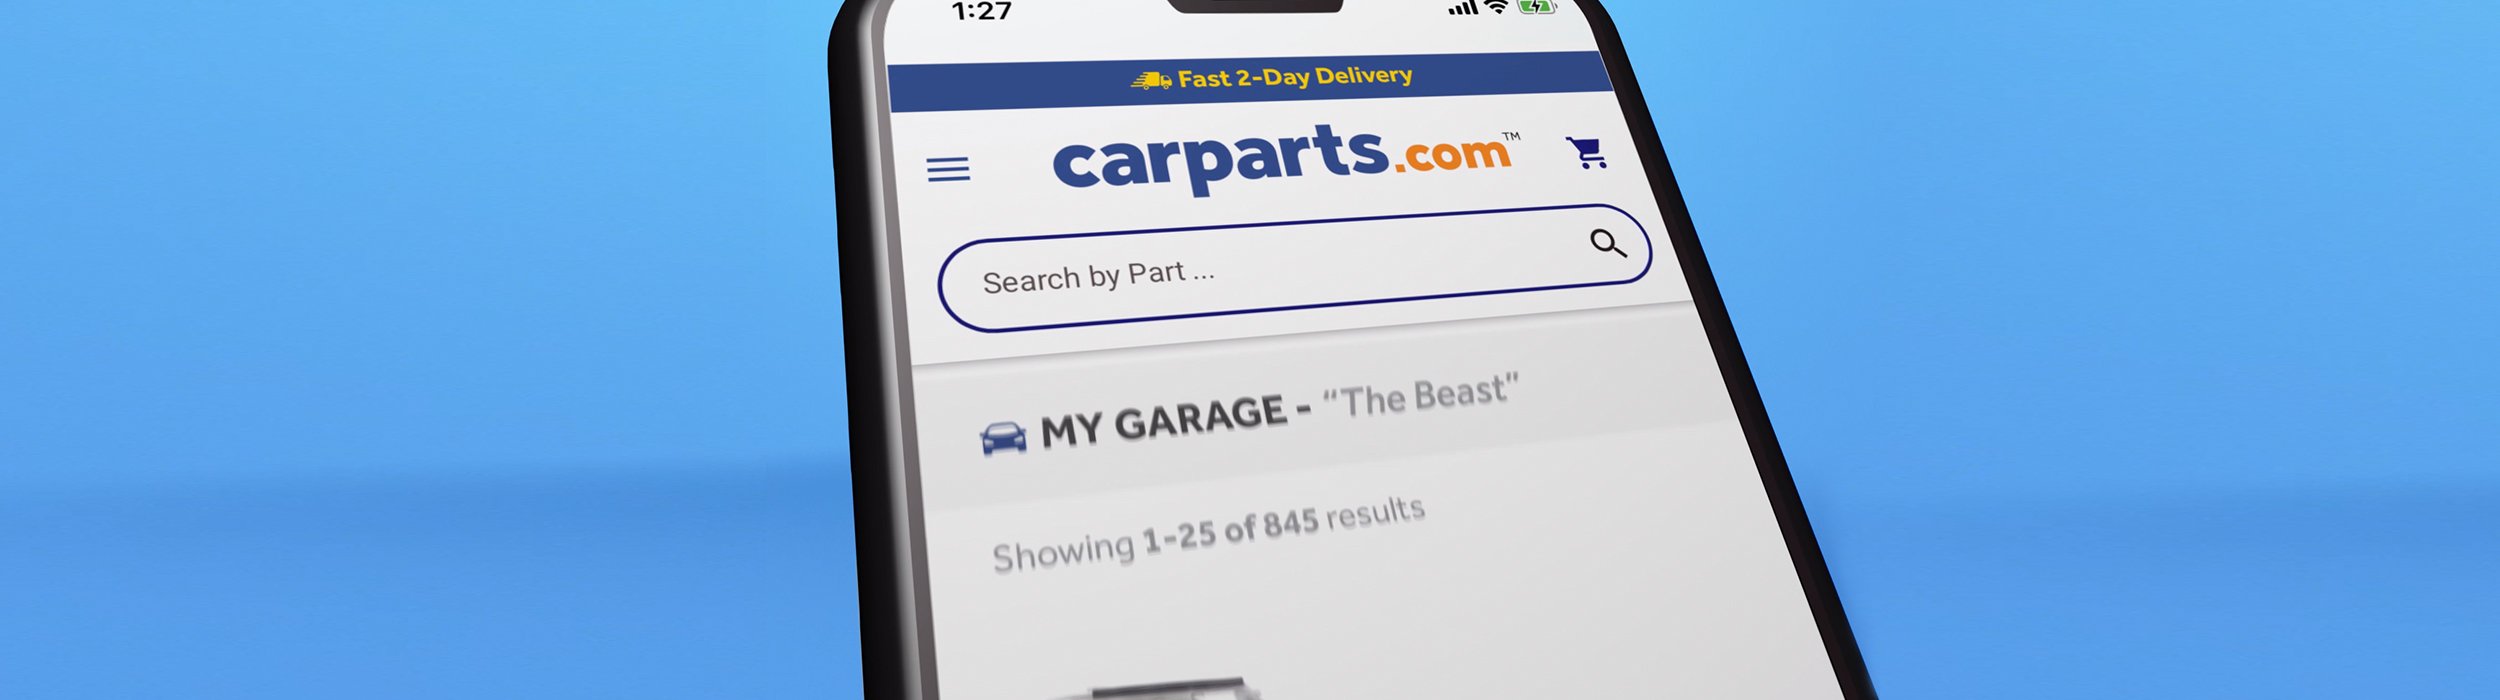 CarParts.com Delivers to America Through Rapid Response TV